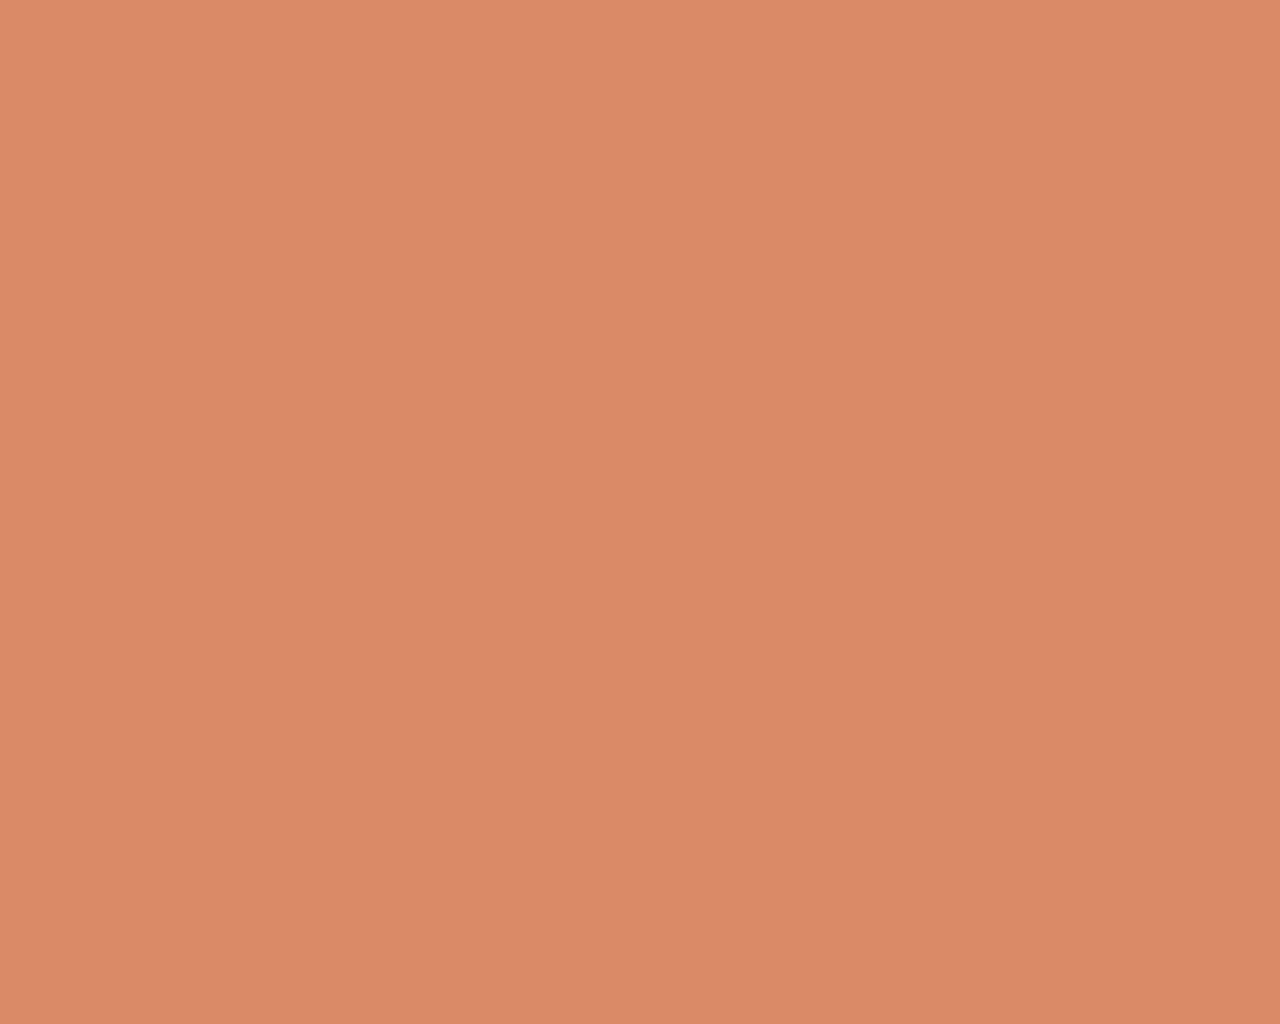 1280x1024 Copper Crayola Solid Color Background